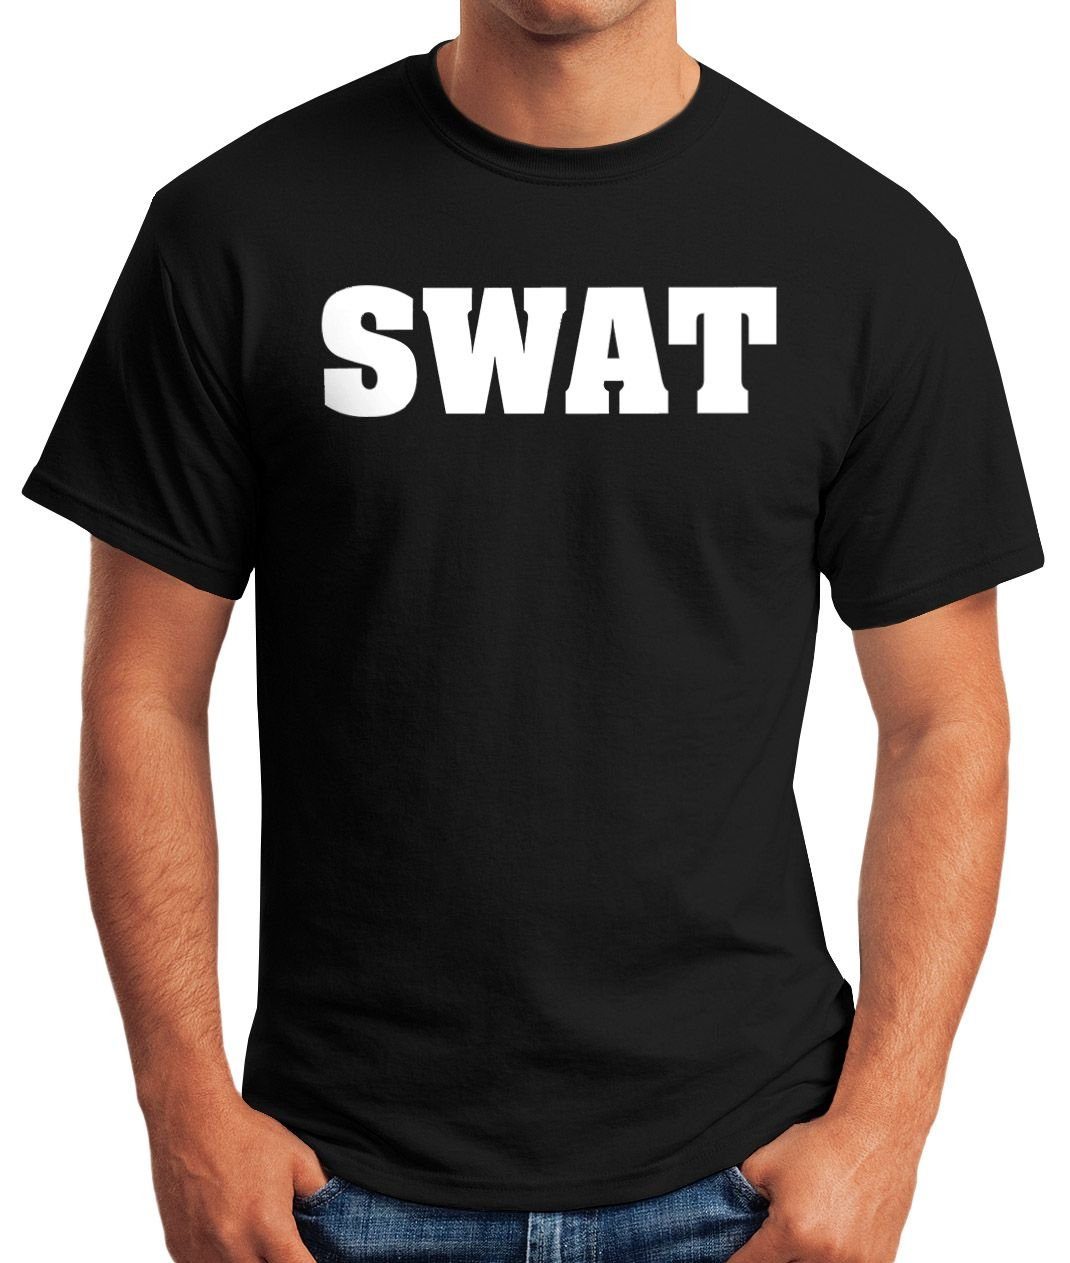 Print-Shirt Herren Fasching Aufdruck SWAT Print Verkleidung MoonWorks mit Fun-Shirt Kostüm Karneval Moonworks® T-Shirt Fasching